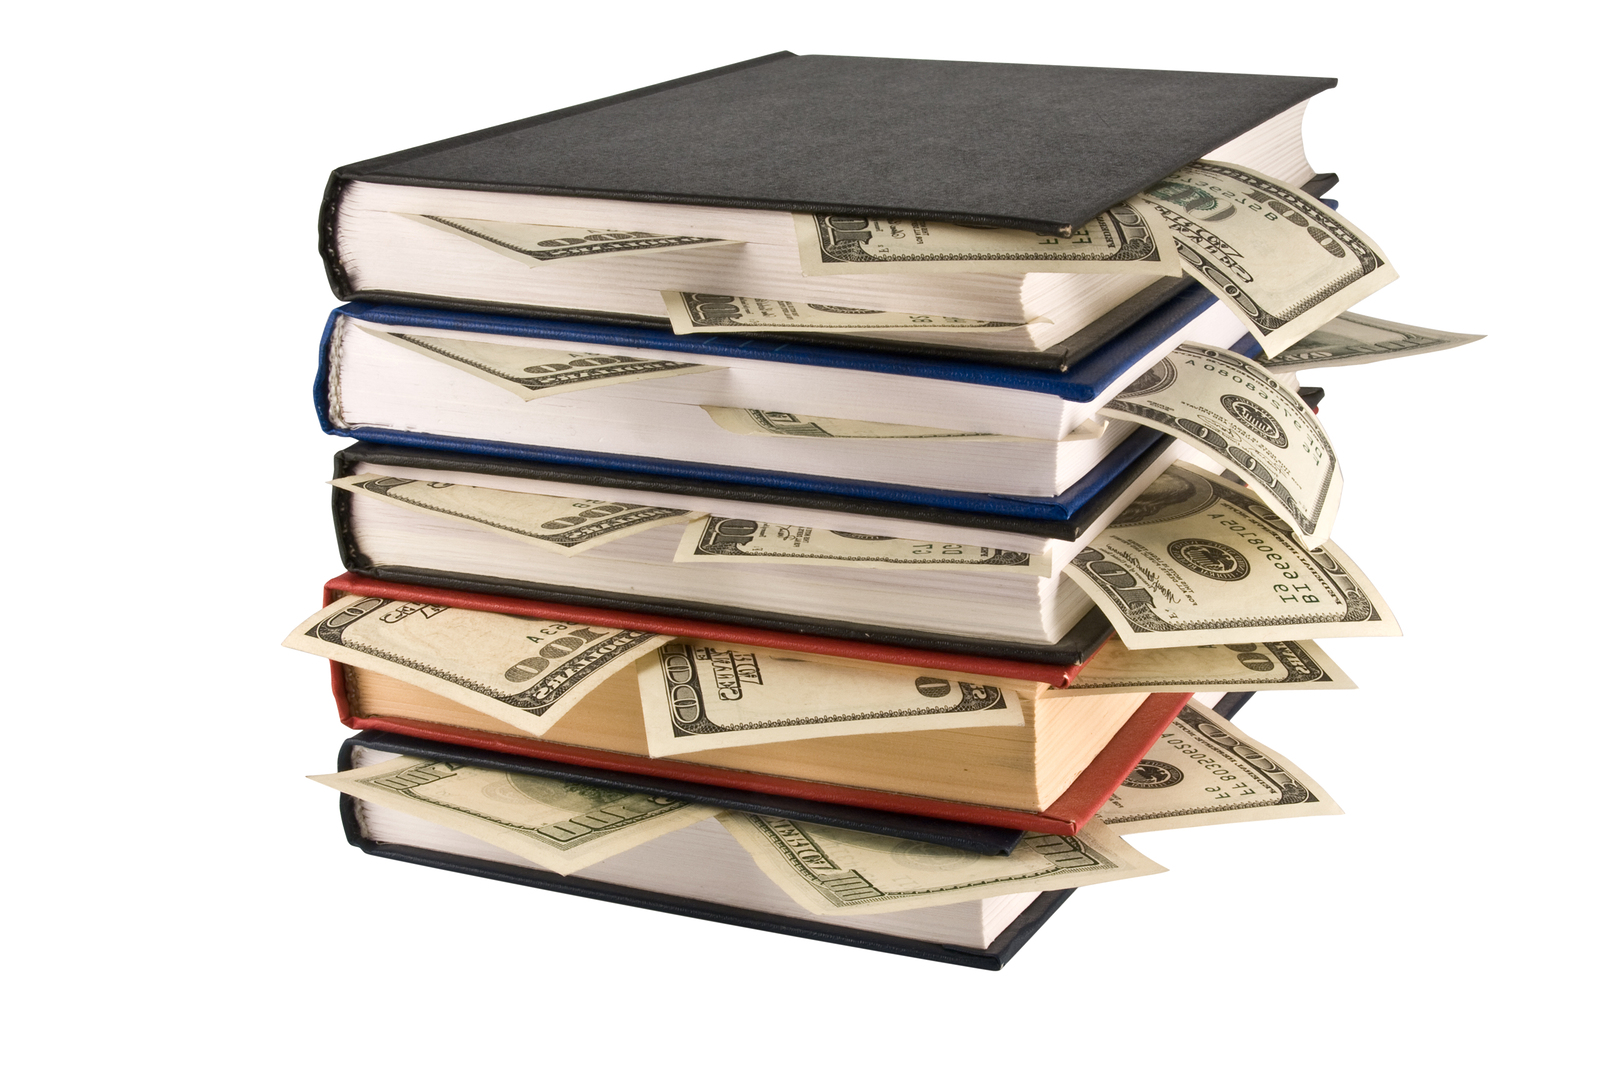 http://sellbooksfast.com/wp-content/uploads/2016/01/bigstock-Dollars-in-the-books-4201911.jpg